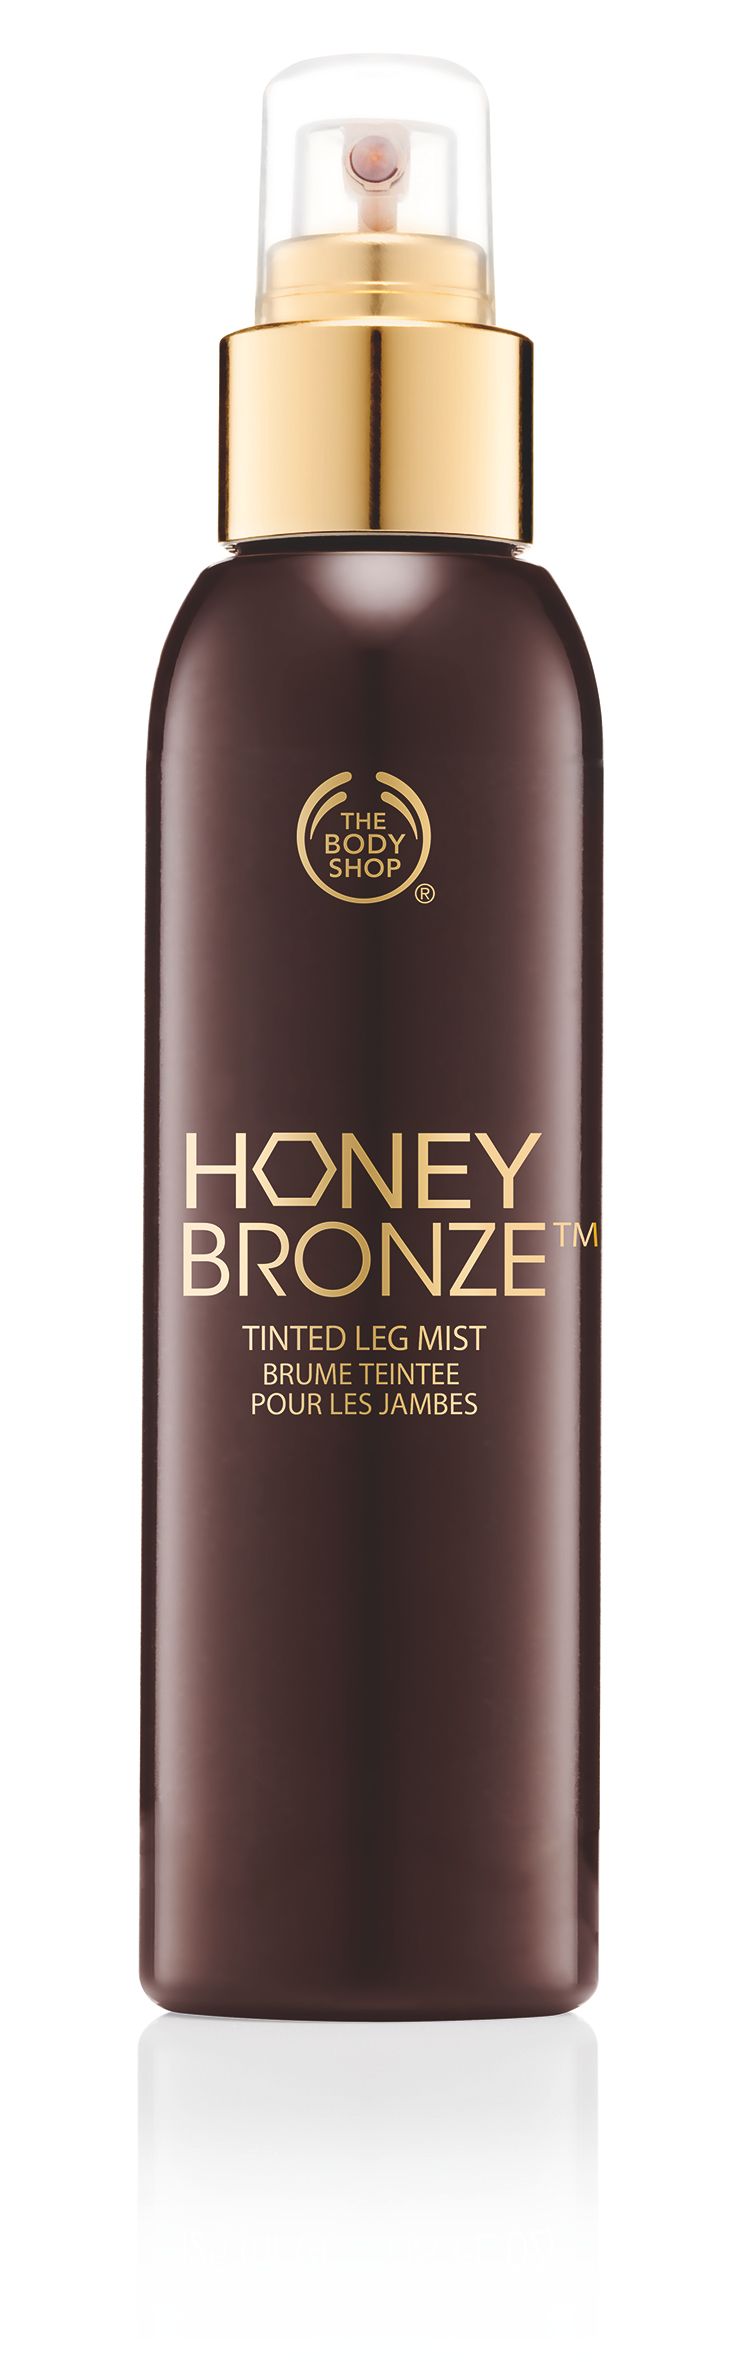 Honey Bronze™ Tinted Leg Mist